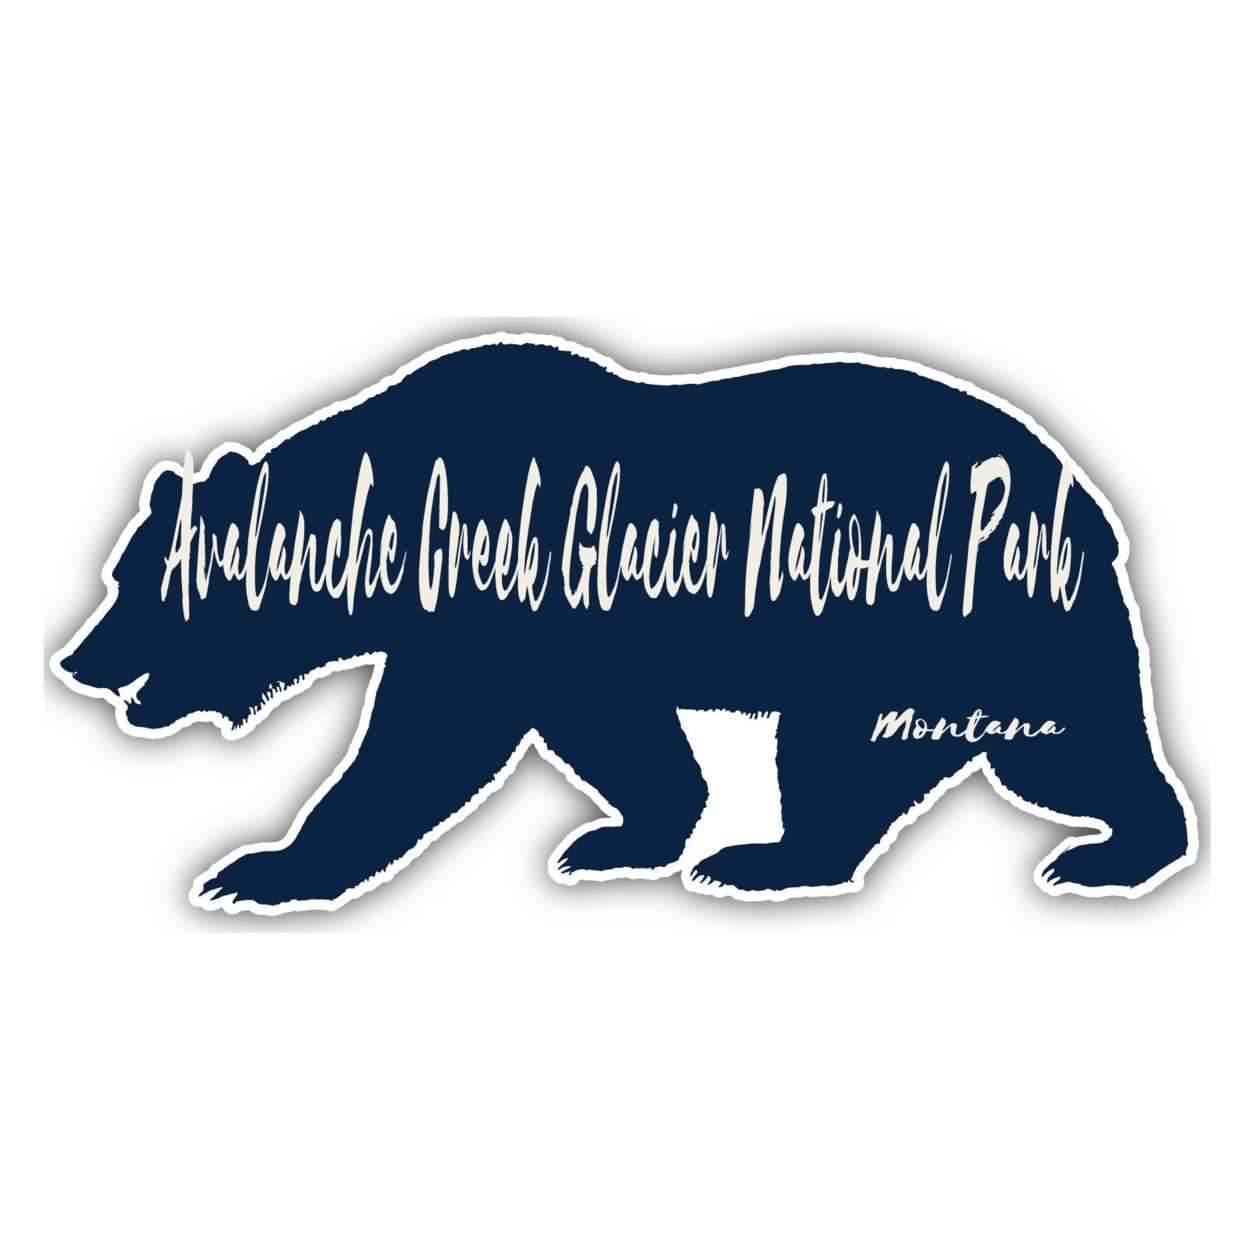 Avalanche Creek Glacier National Park Montana Souvenir Decorative Stickers (Choose Theme And Size) - 4-Pack, 2-Inch, Bear